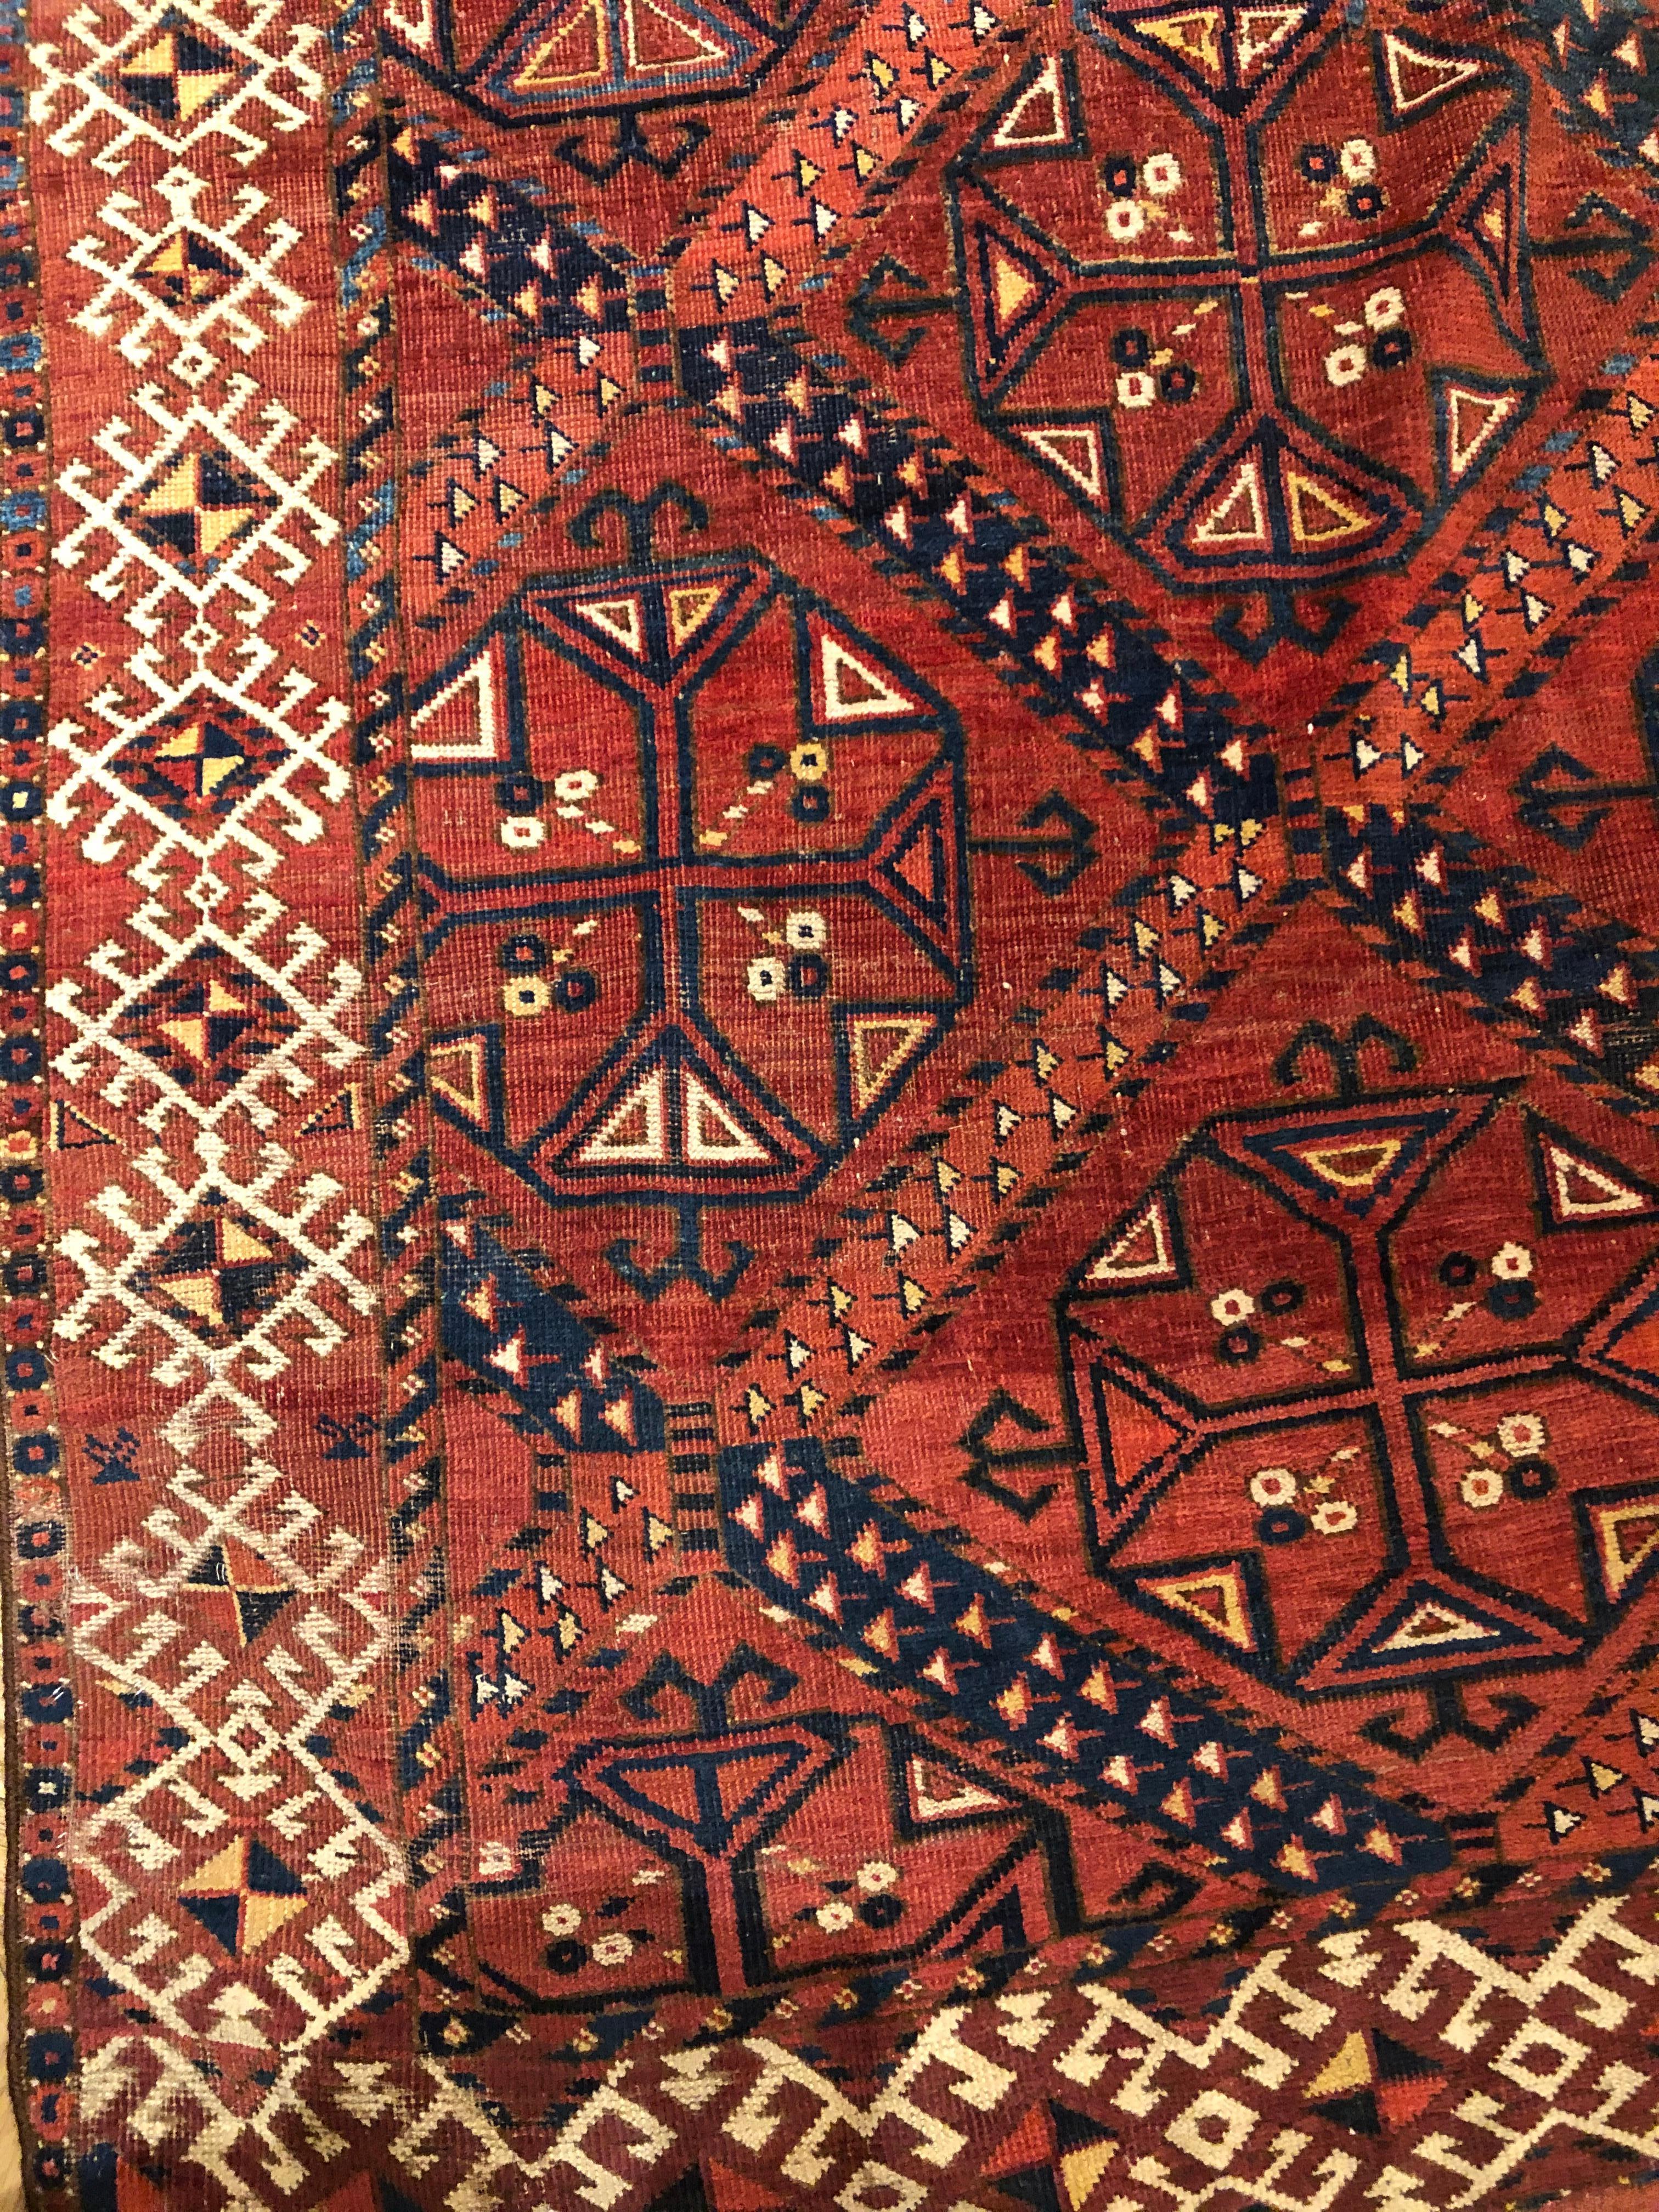 19th Century Antique Red Geometric Turkmen Erzari Rug € 9, 000, ca 1870 For Sale 8